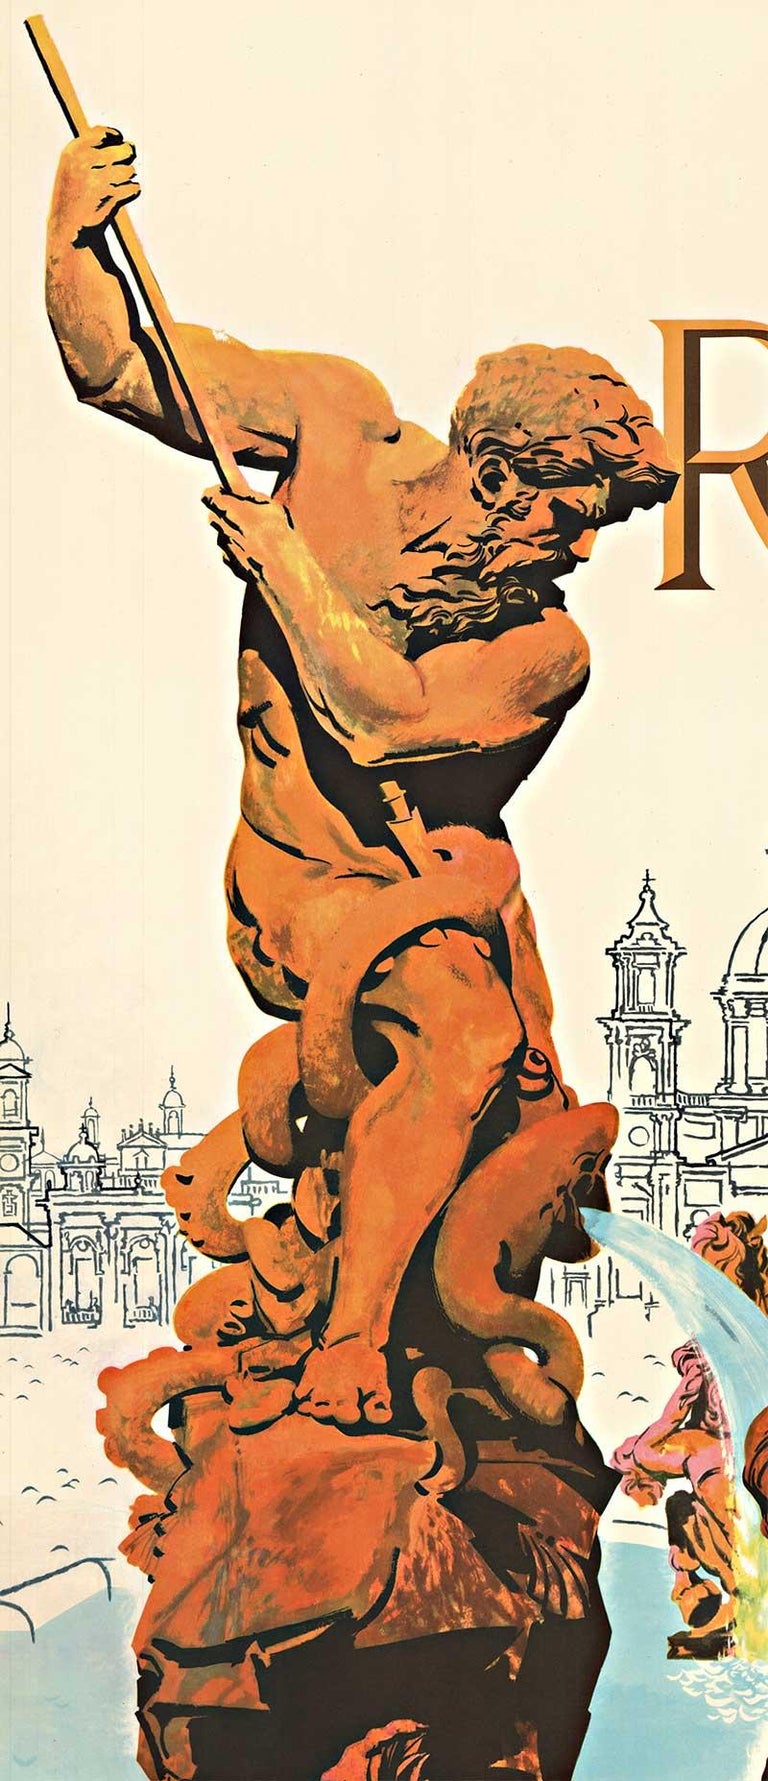 David Klein Figurative Print - Original earliest Rome via TWA vintage travel poster